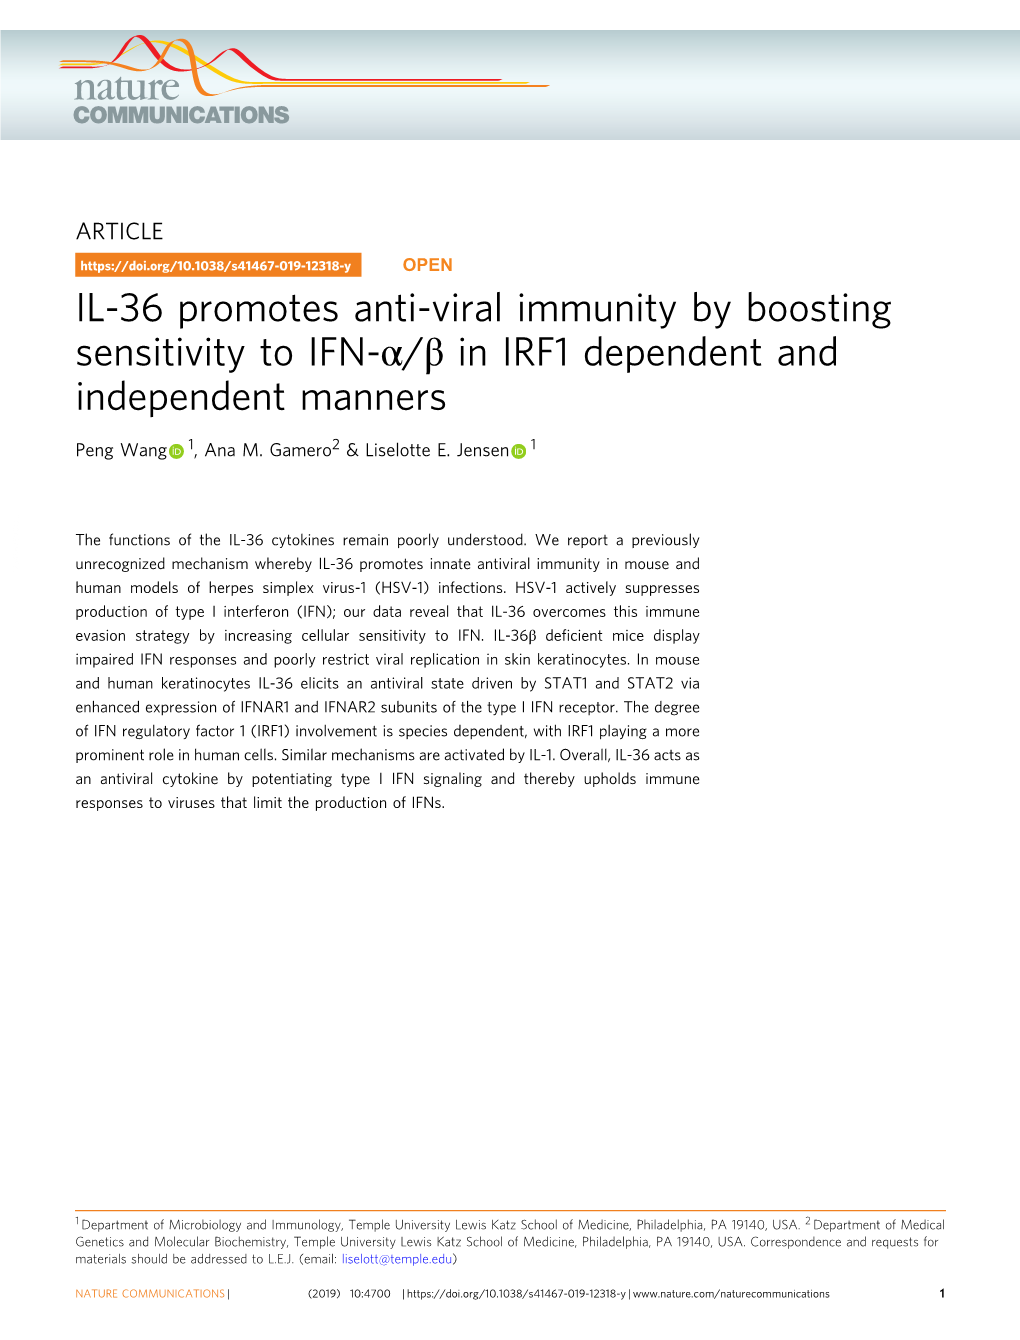 IL-36 Promotes Anti-Viral Immunity by Boosting Sensitivity to IFN-Î